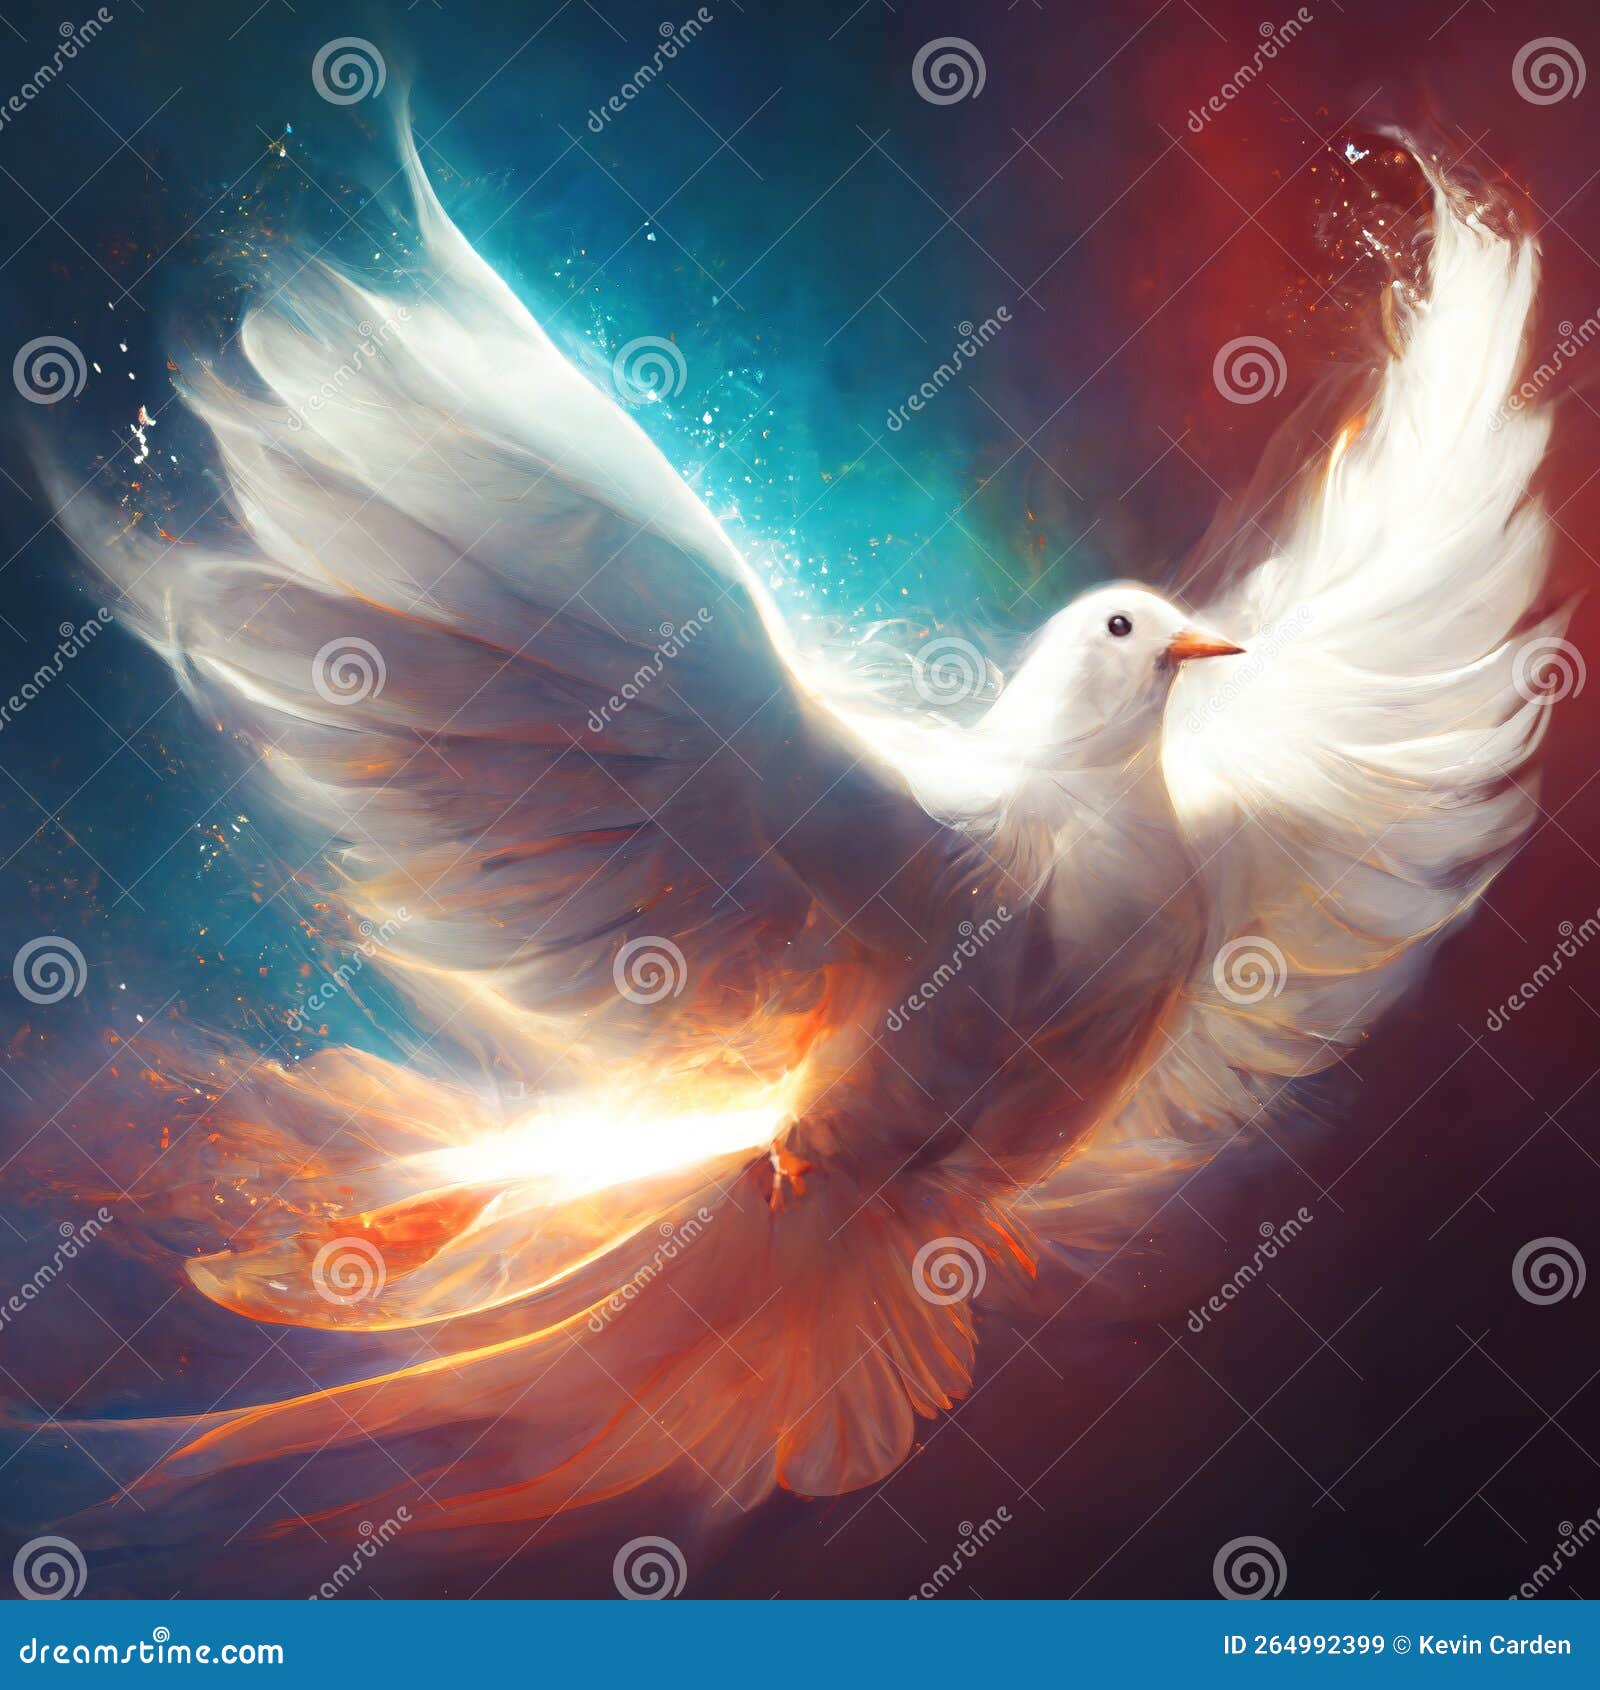 white dove holy spirit